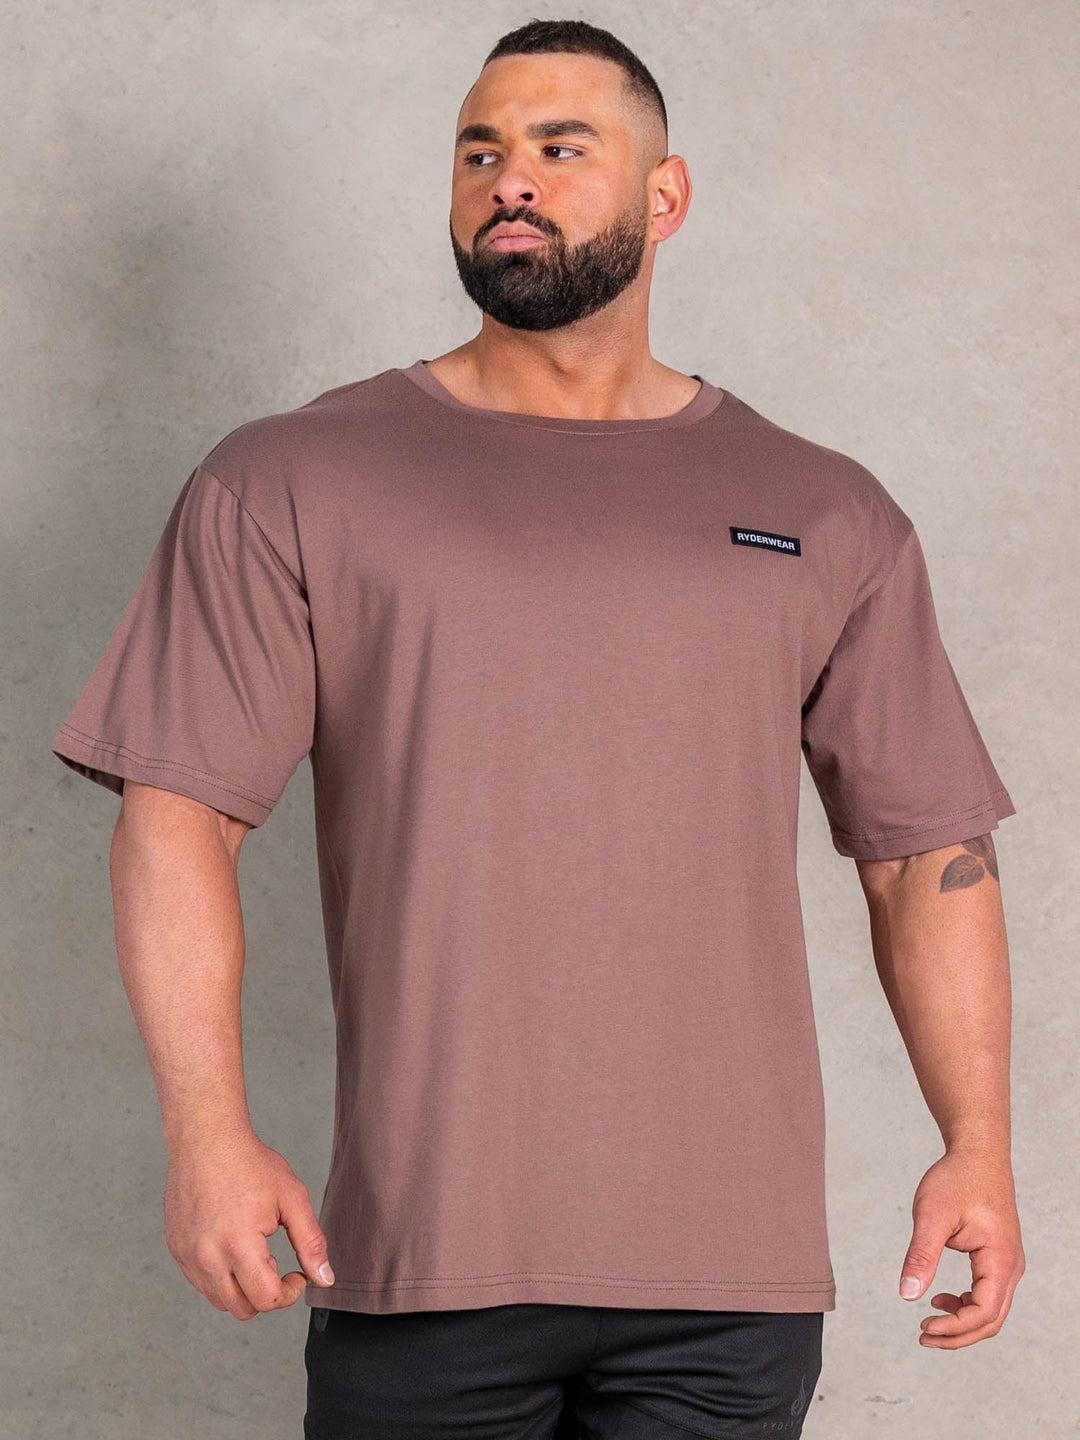 NRG Oversized T-Shirt - Almond Clothing Ryderwear 